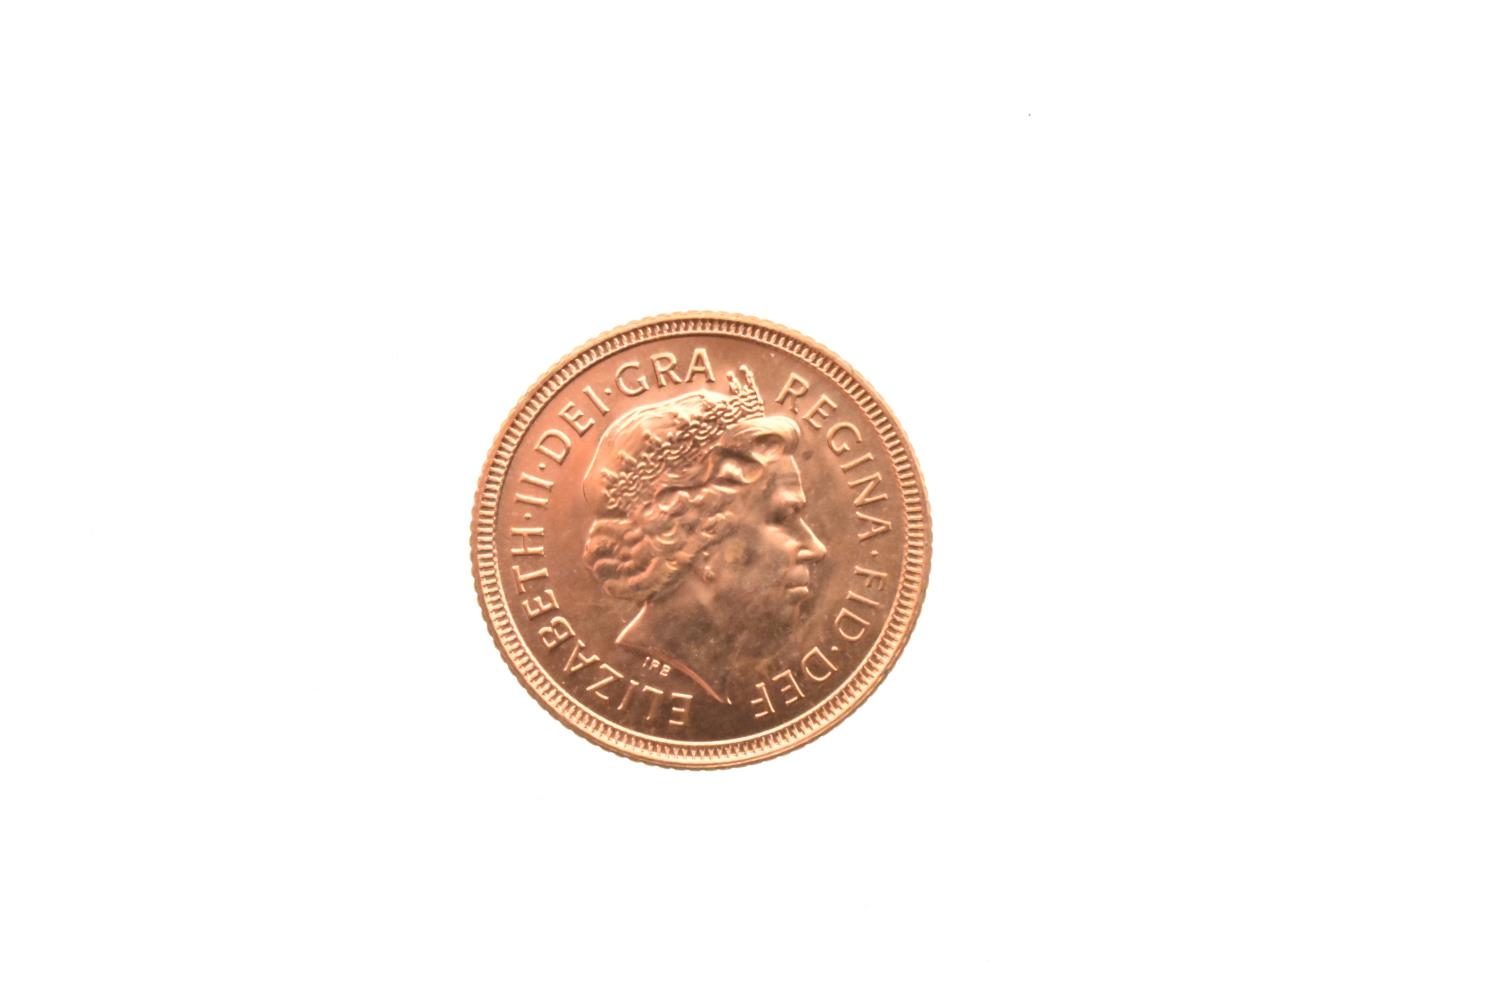 United Kingdom - Elizabeth II (1952-2022), Gold Half Sovereign, dated 2001, - Image 2 of 2